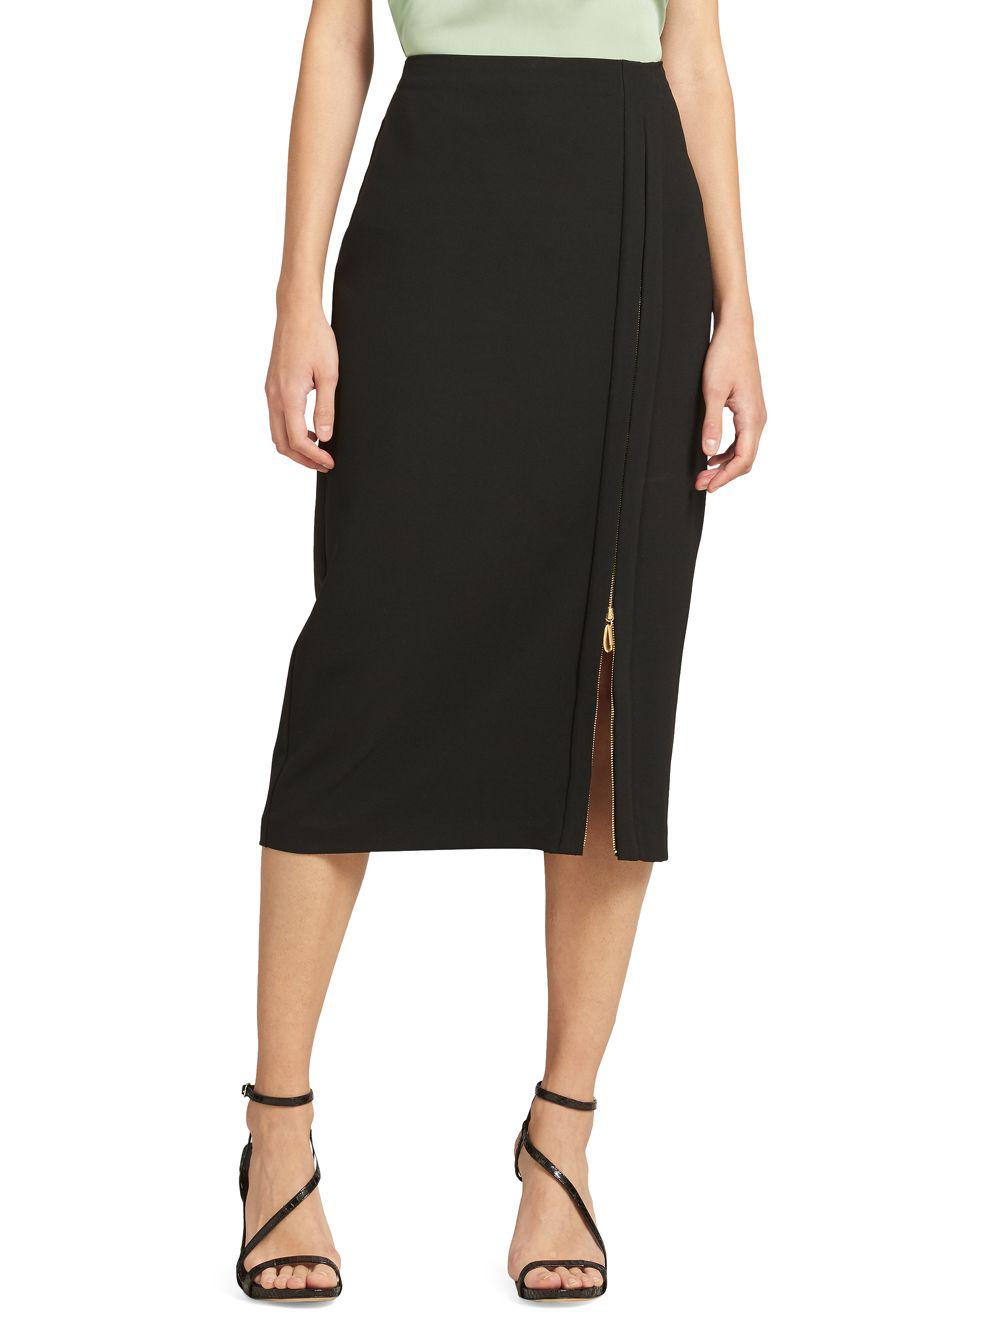 Lyst - Donna Karan High-waist Pencil Skirt in Black